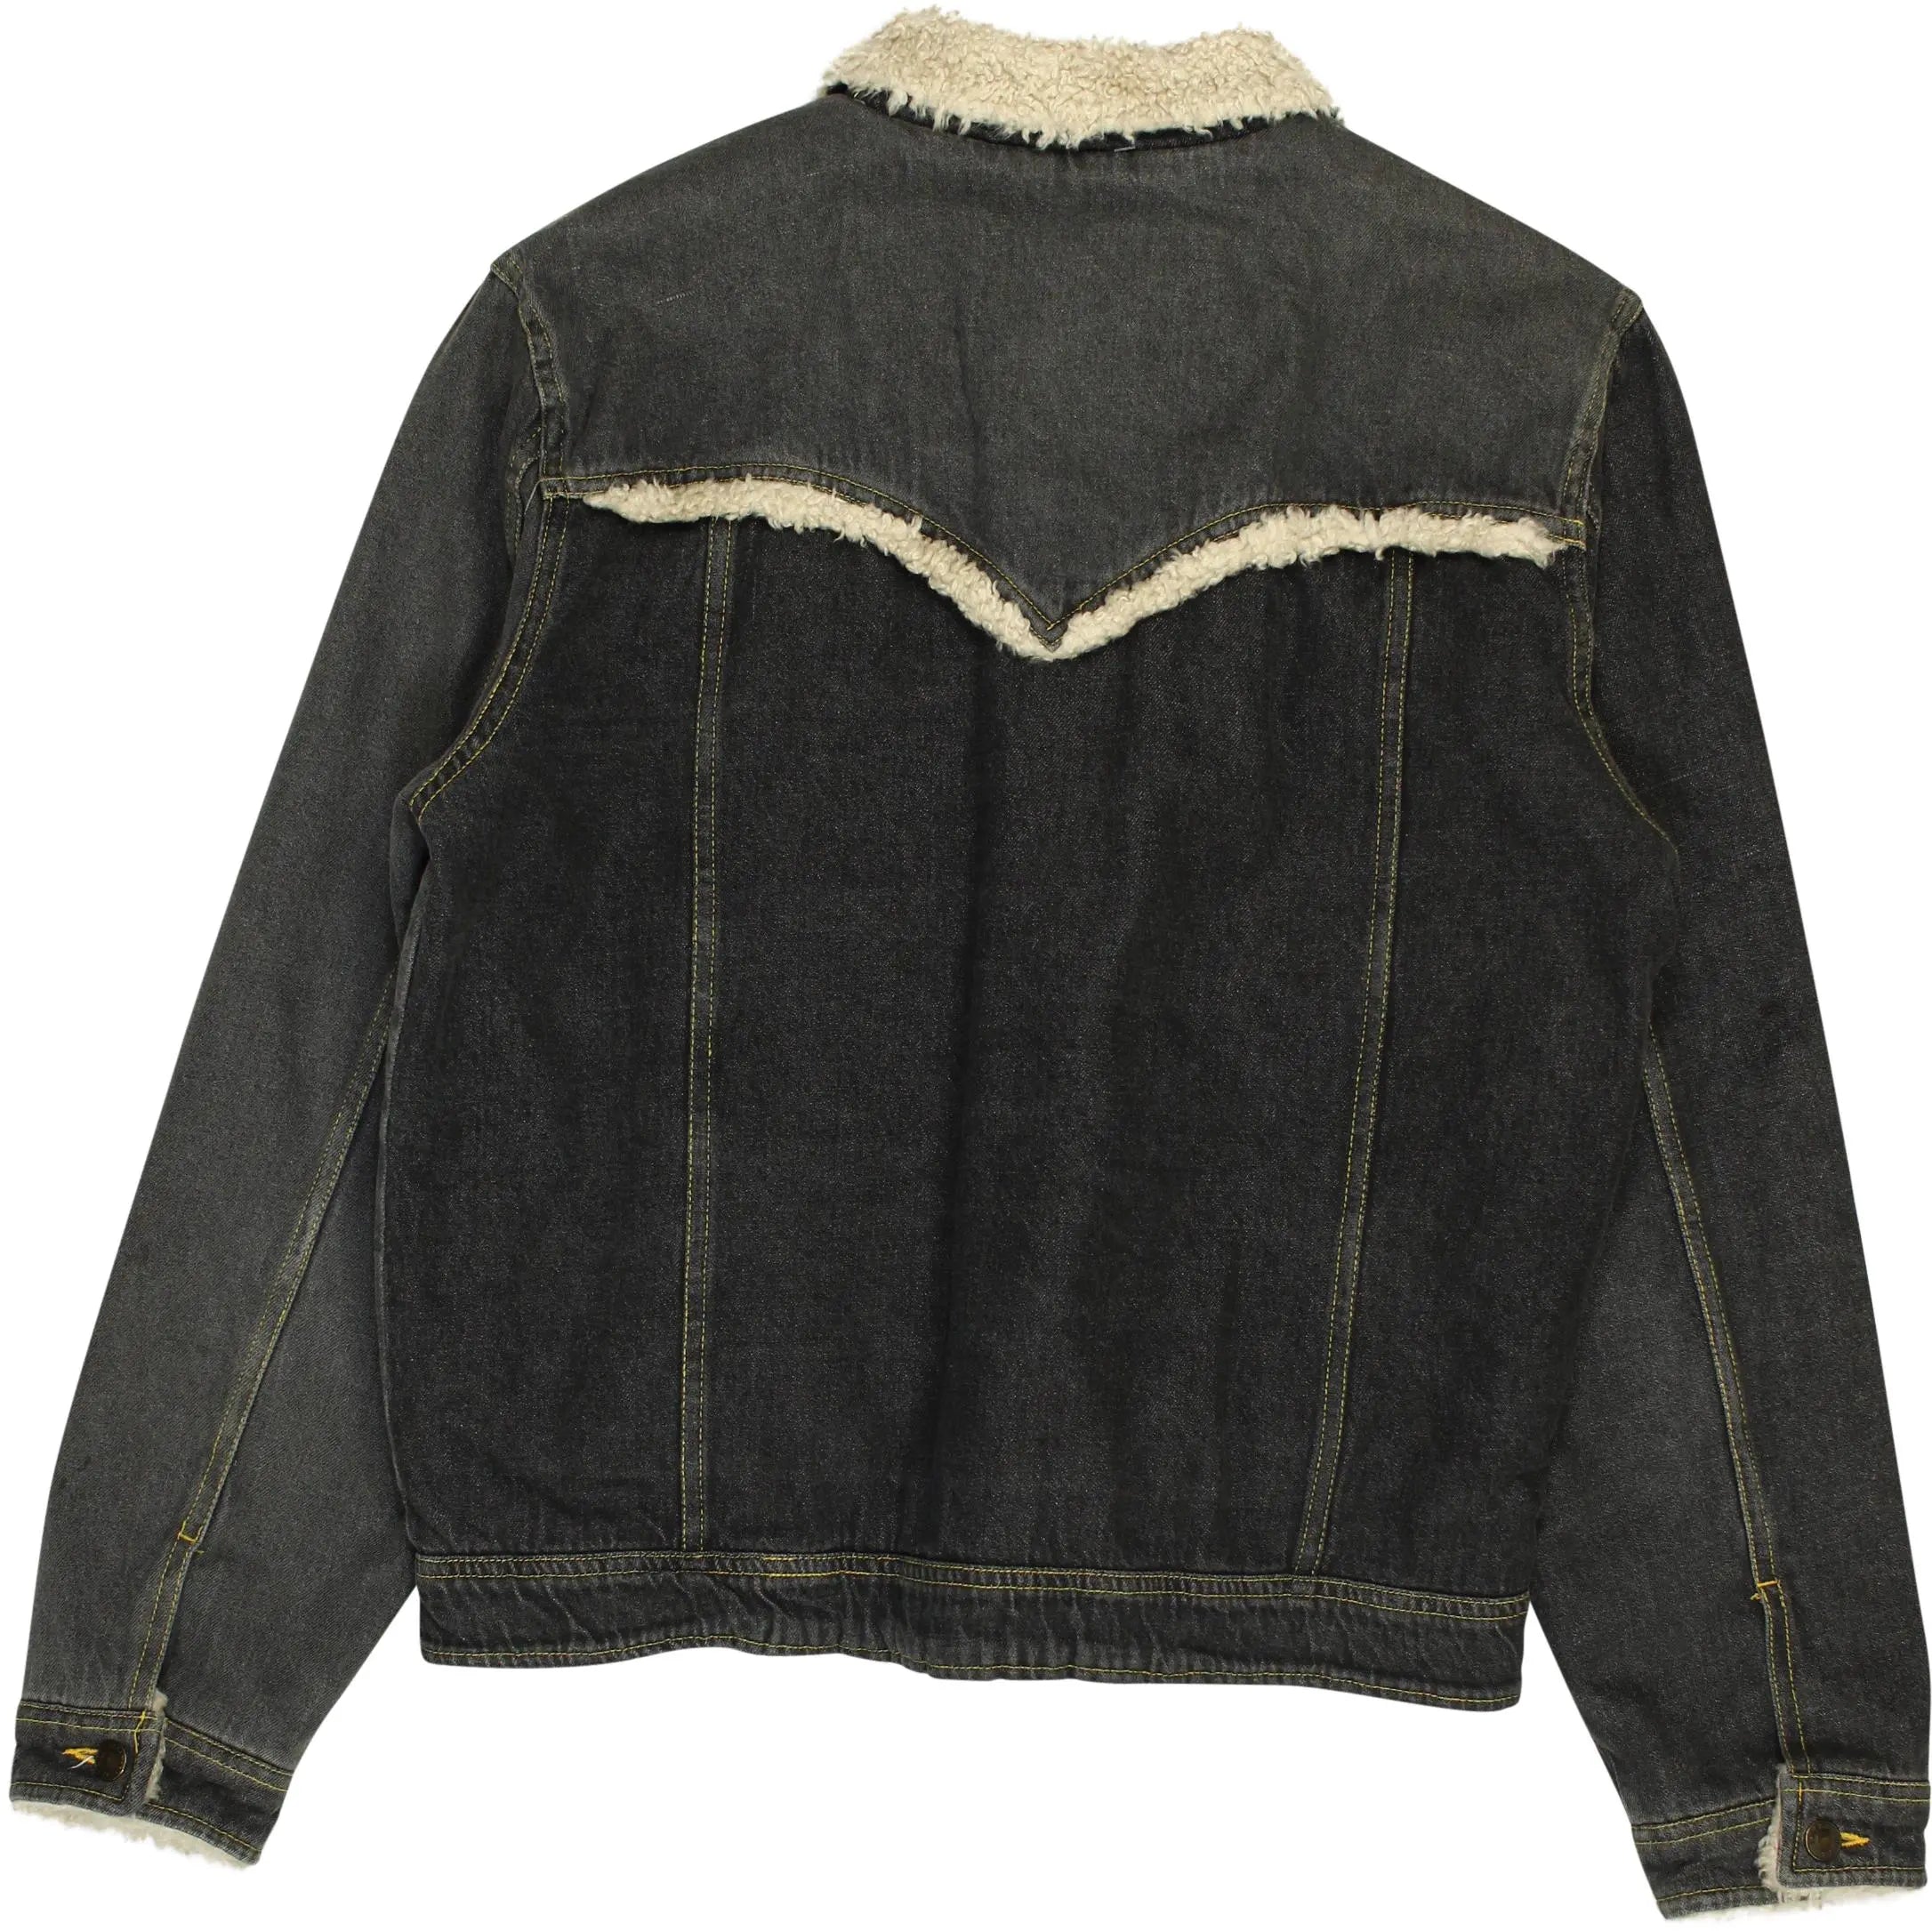 Uno-Tex Design - Teddy Denim Jacket- ThriftTale.com - Vintage and second handclothing